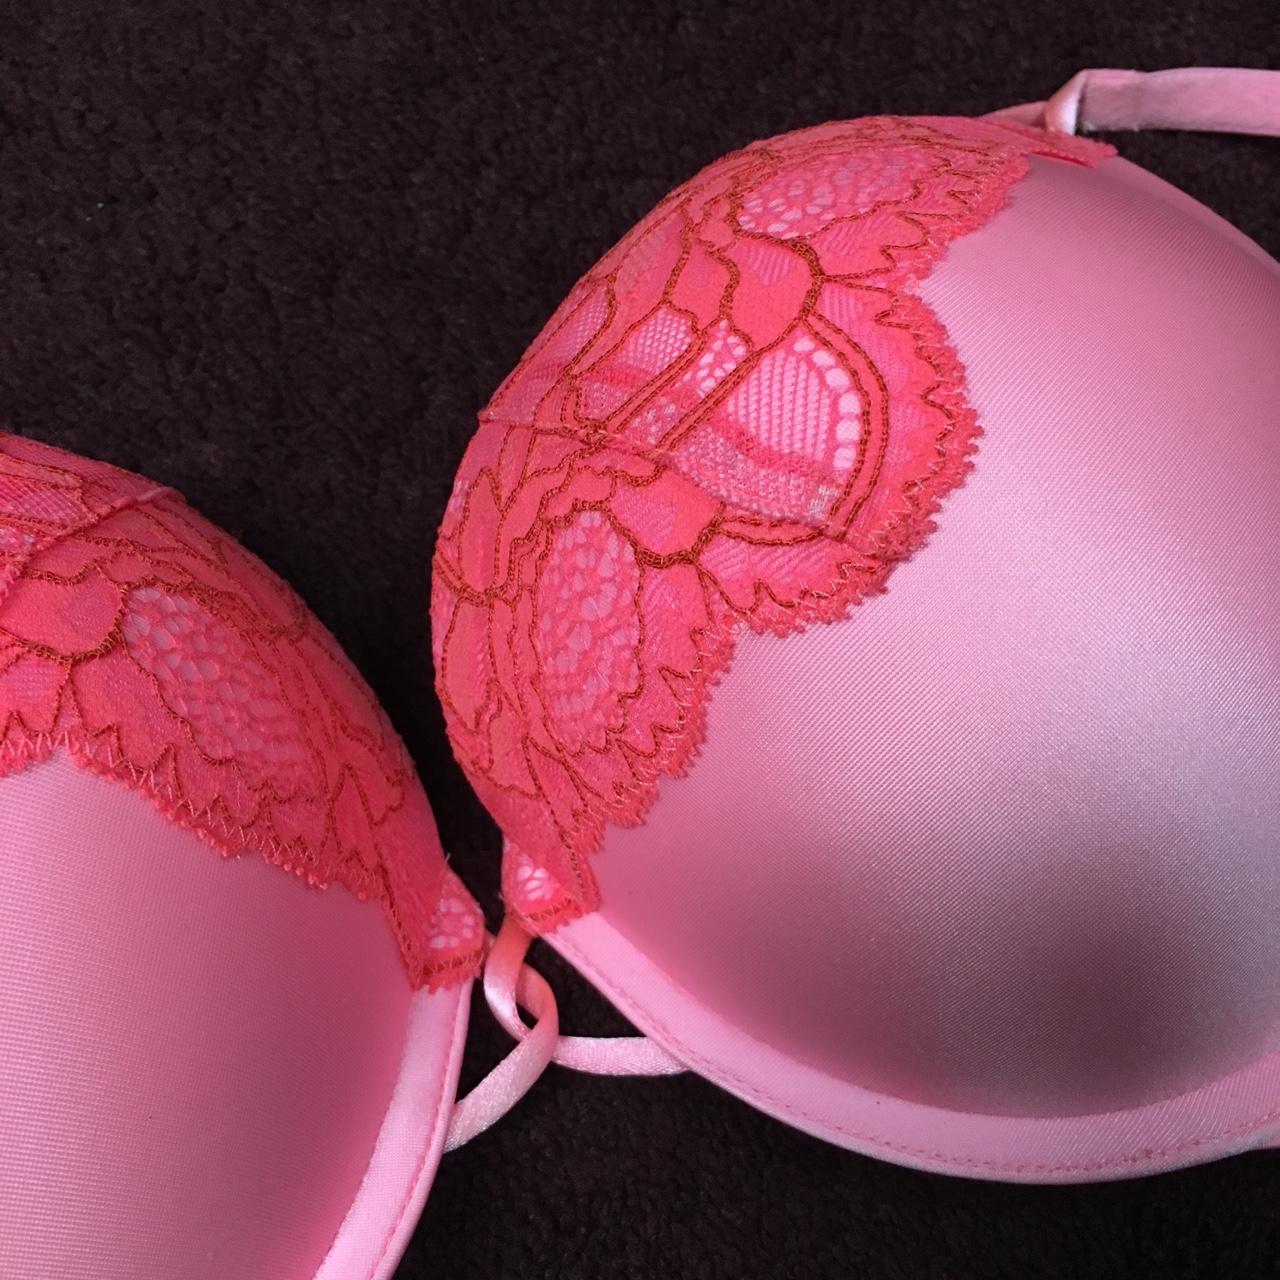 Victoria secret pink bombshell bra. The one that